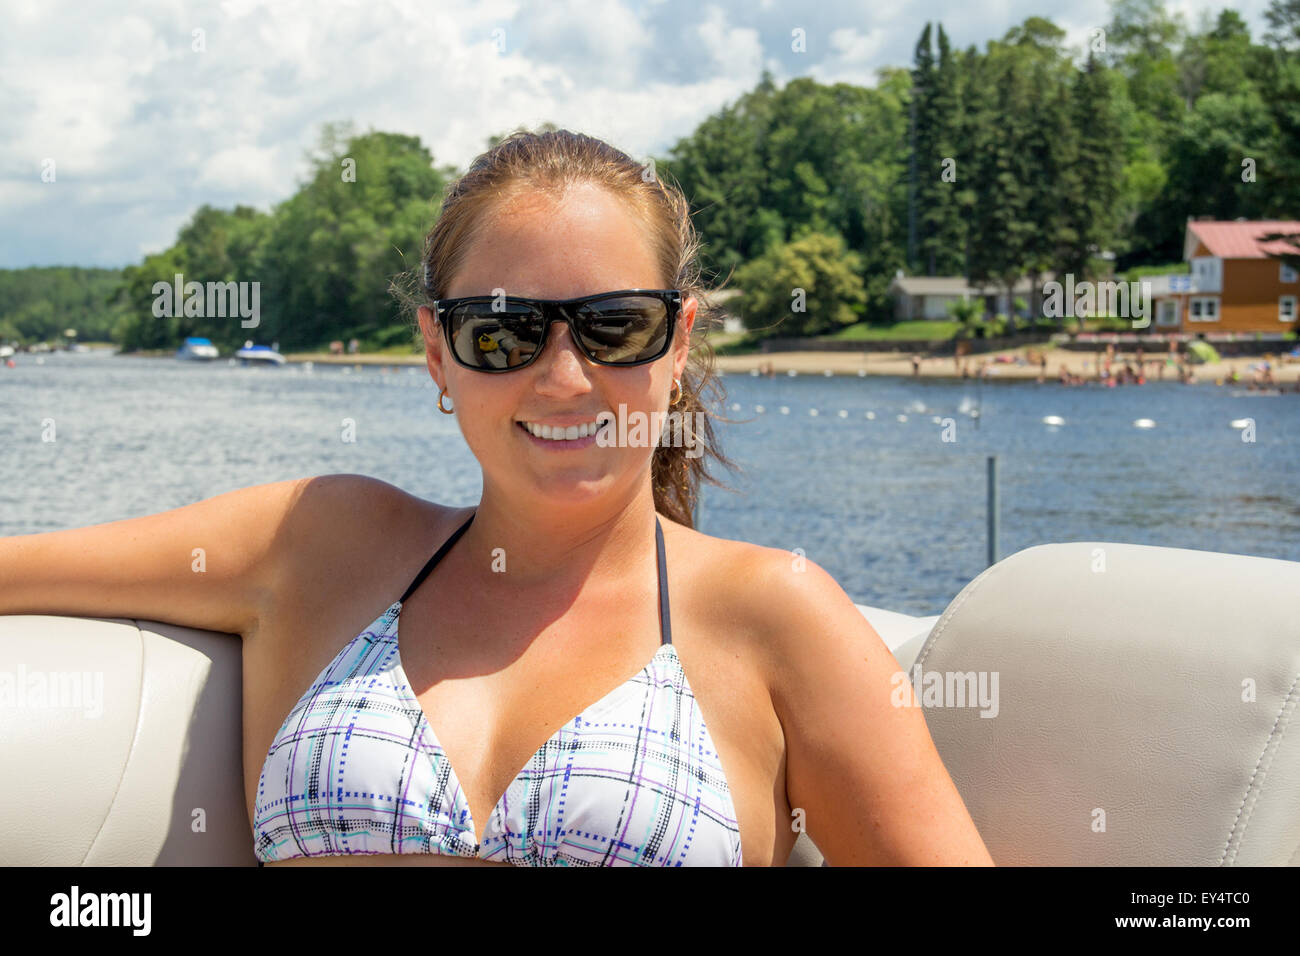 woman sunbathing on a boat Stock Photo